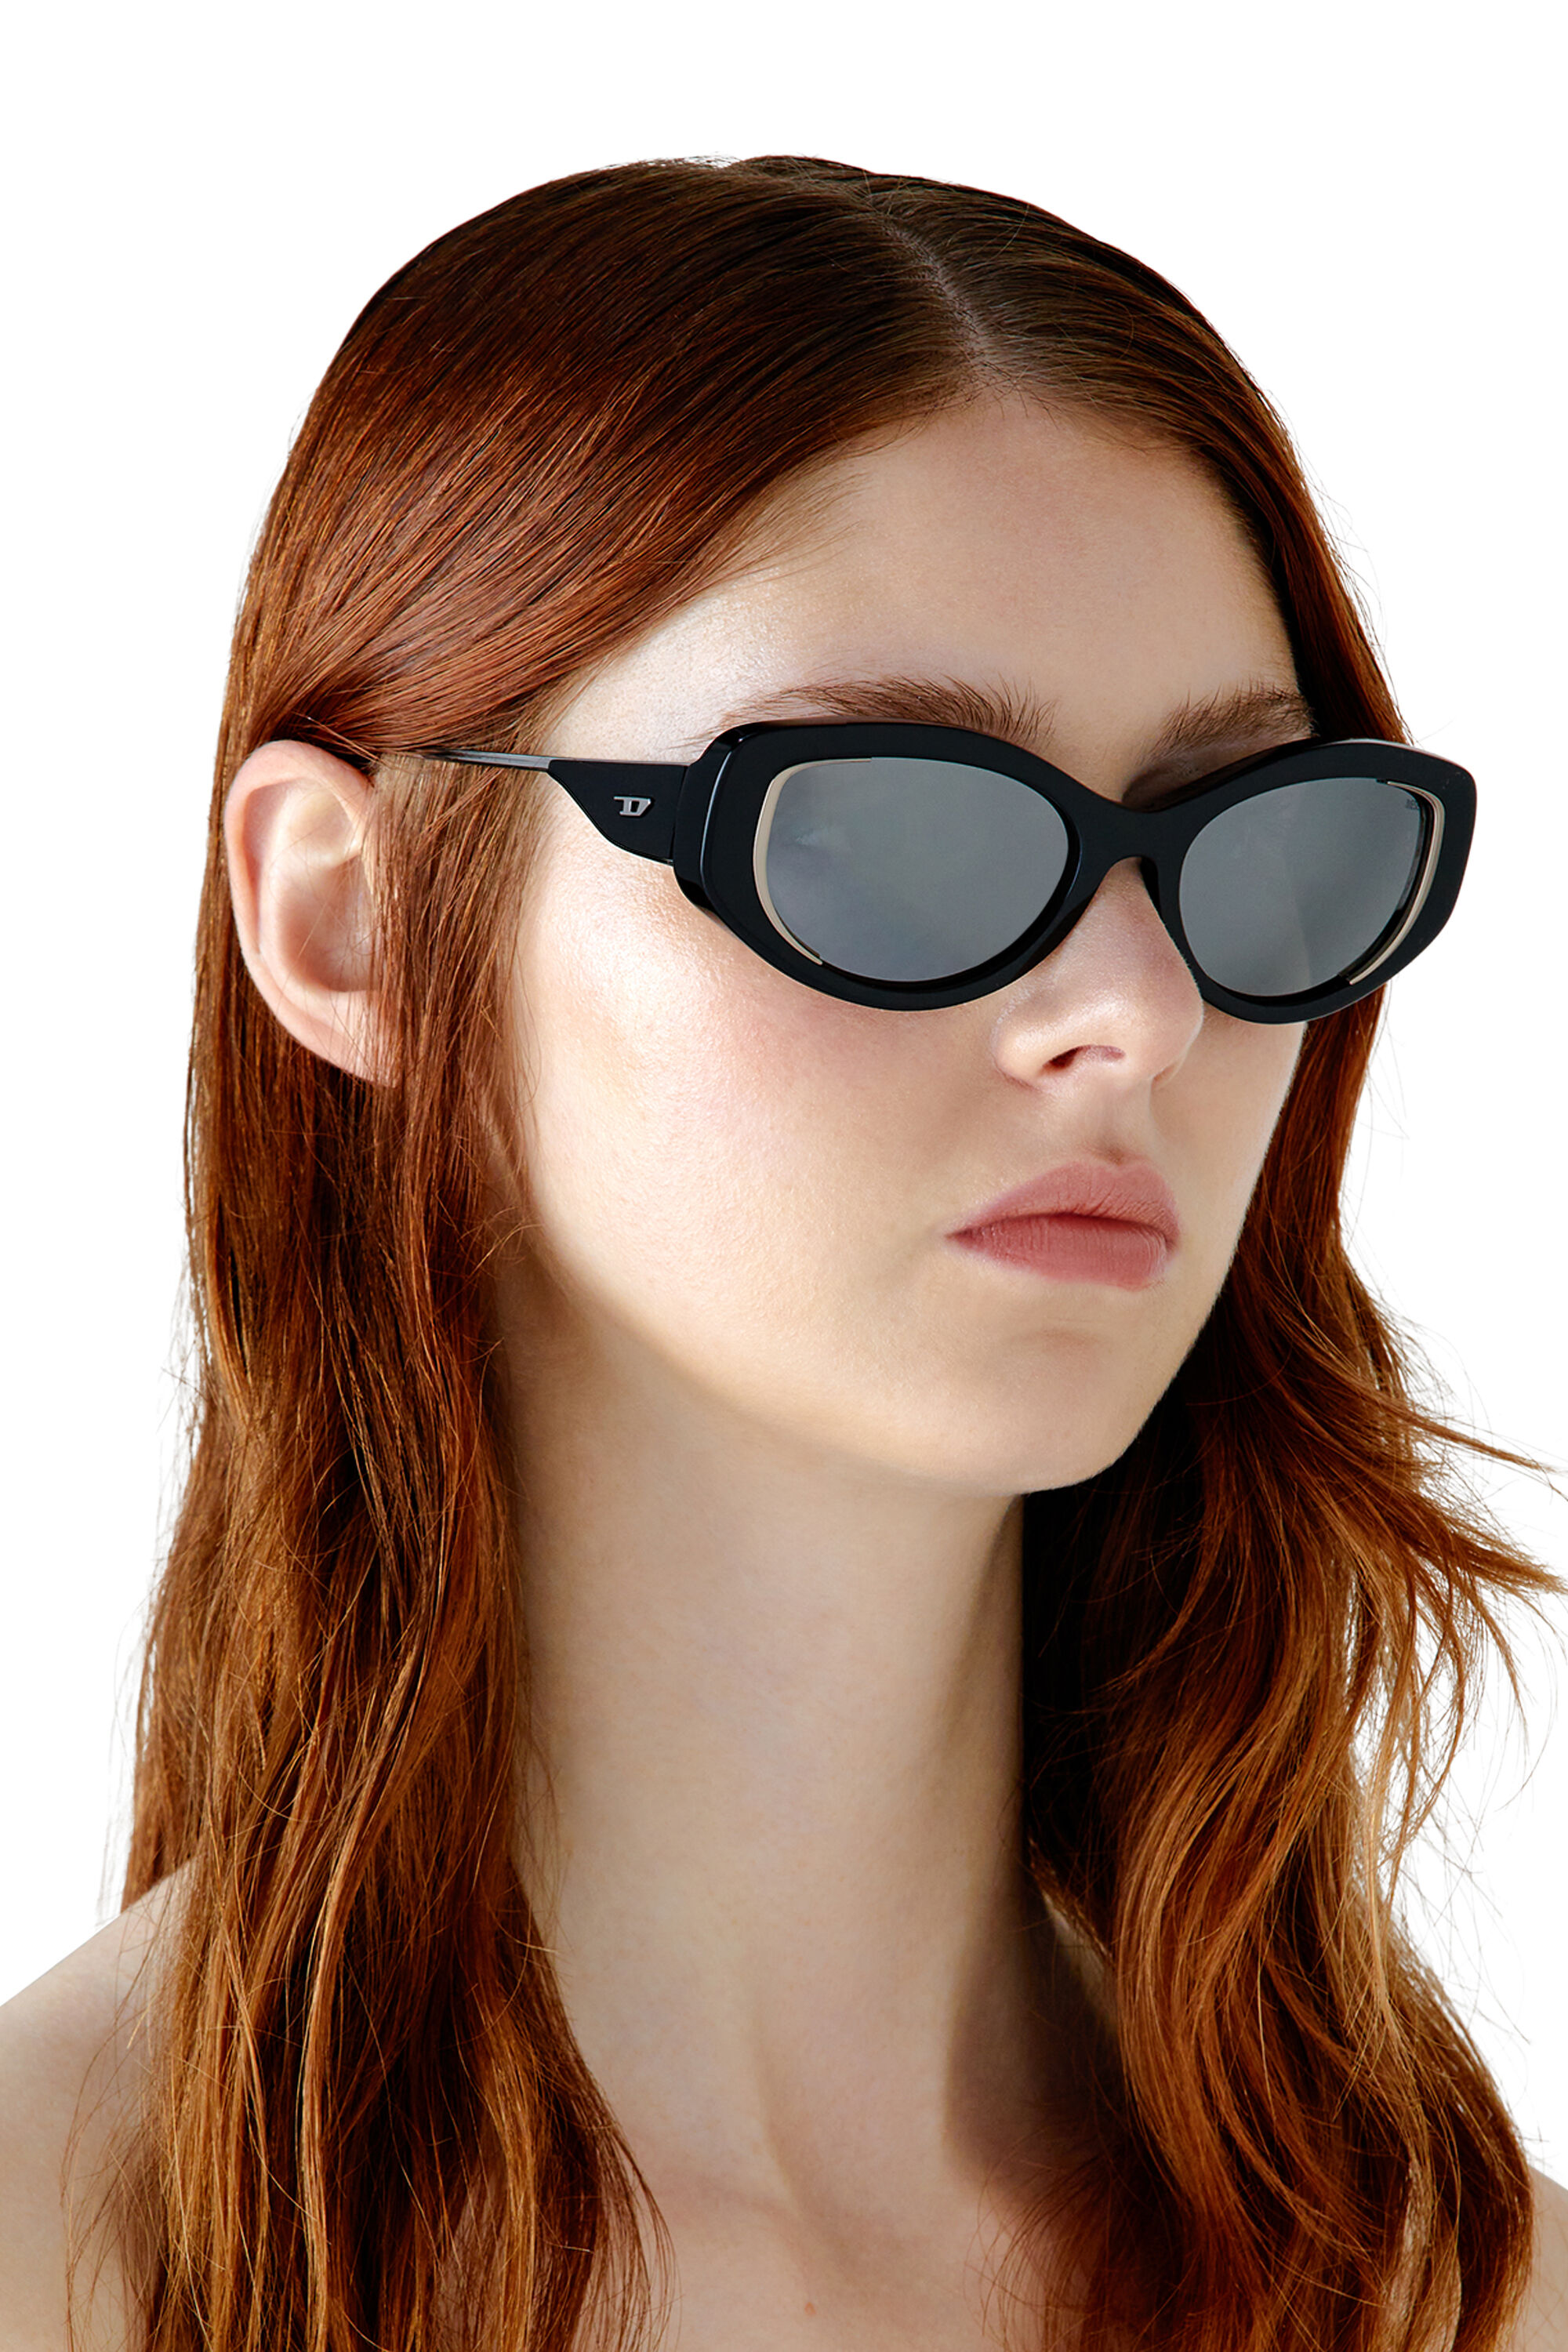 Women's Cat-eye style sunglasses | Black | Diesel